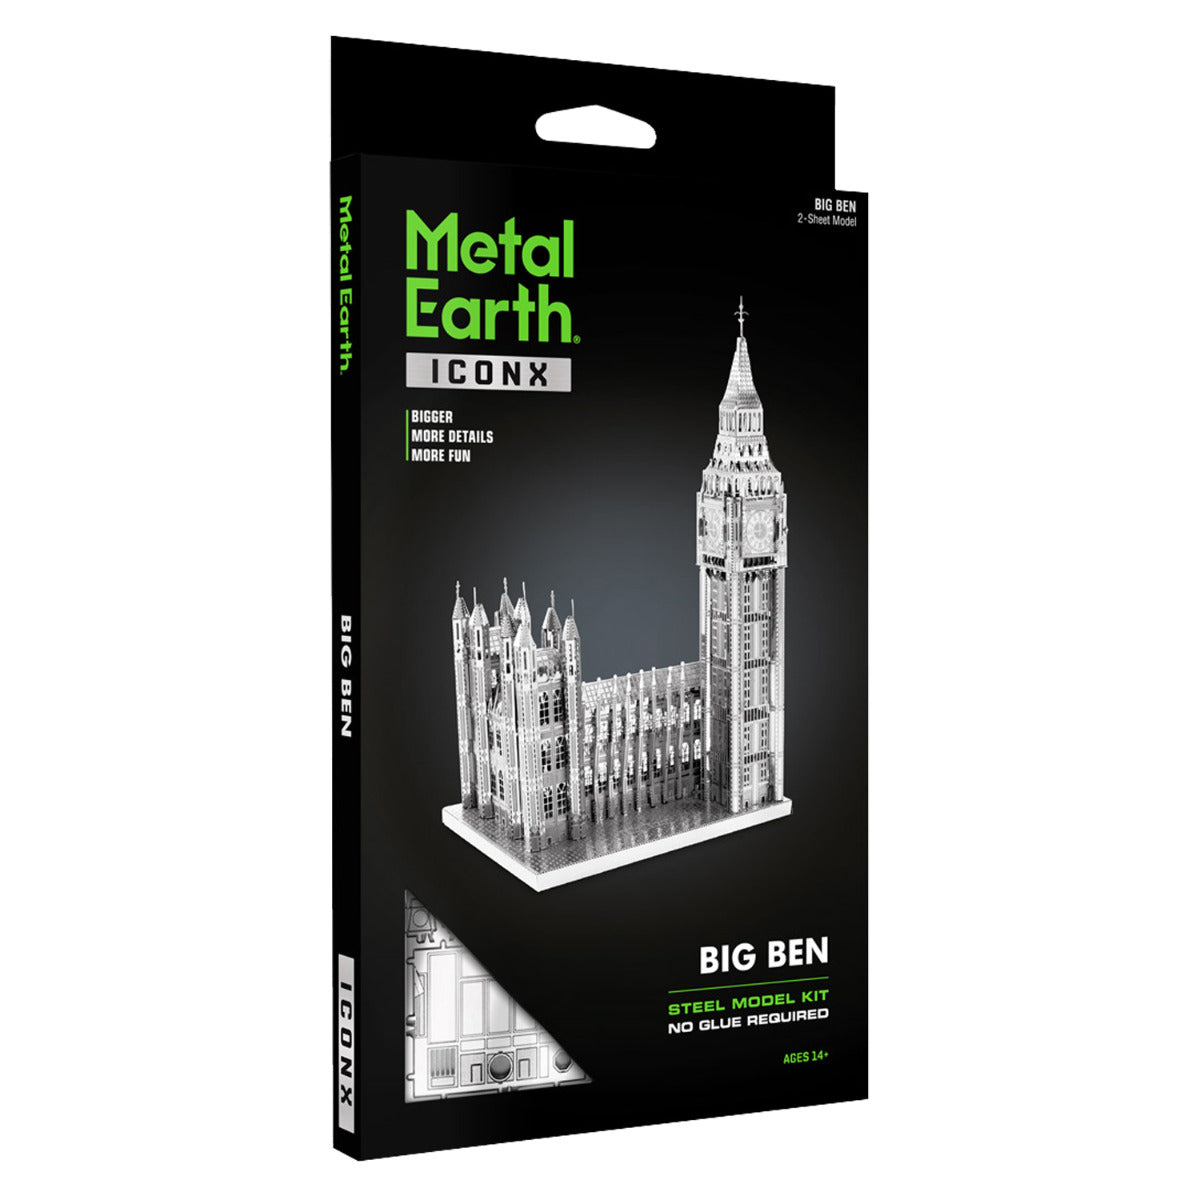 Metal Earth Metallbausätze ICX018 ICONX Big Ben Glockenturm Metall Modell